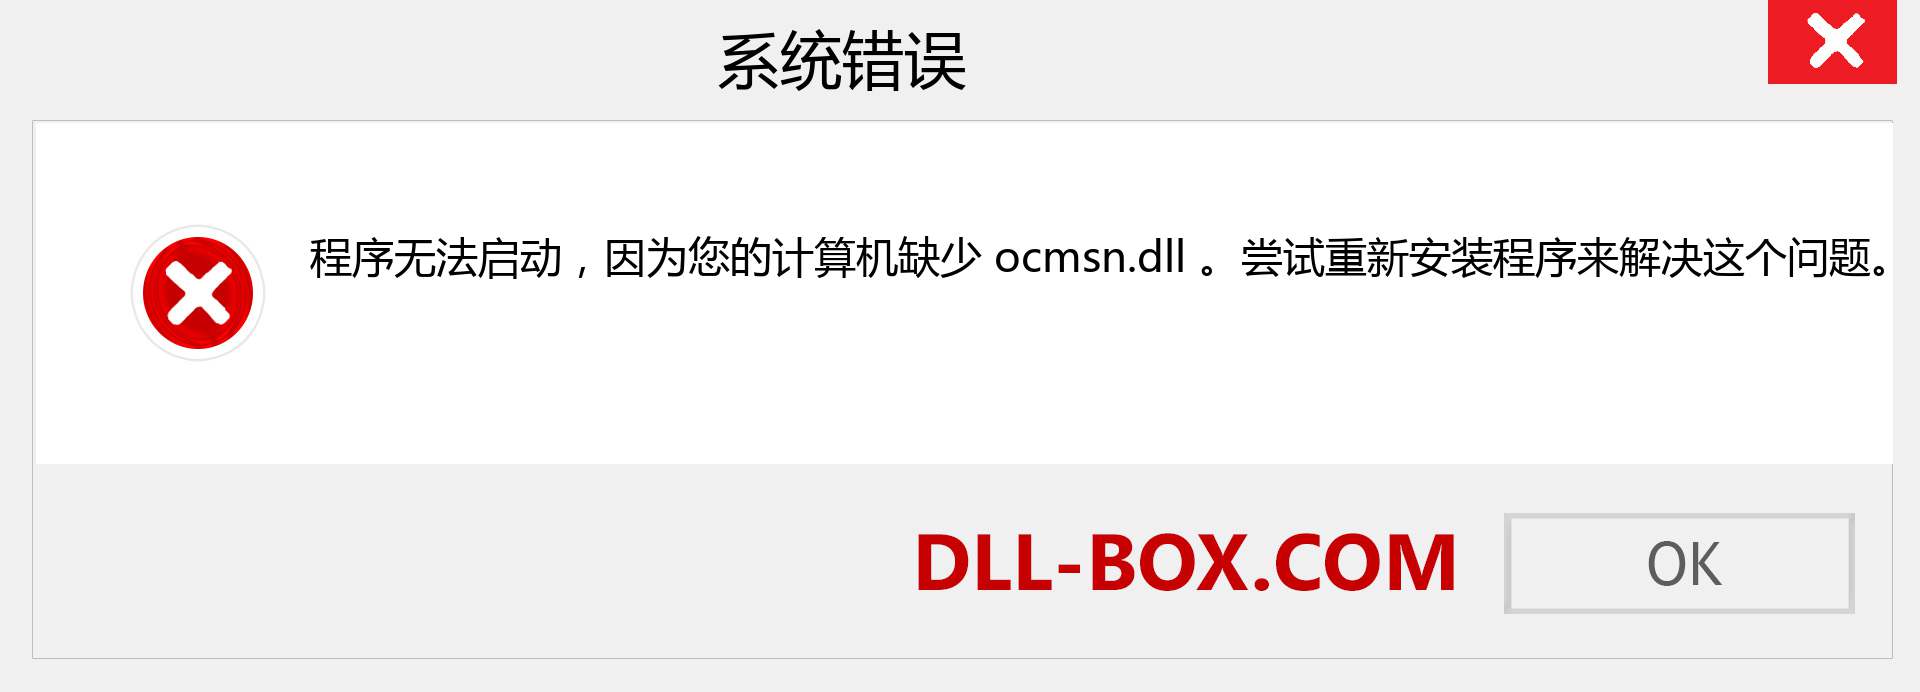 ocmsn.dll 文件丢失？。 适用于 Windows 7、8、10 的下载 - 修复 Windows、照片、图像上的 ocmsn dll 丢失错误